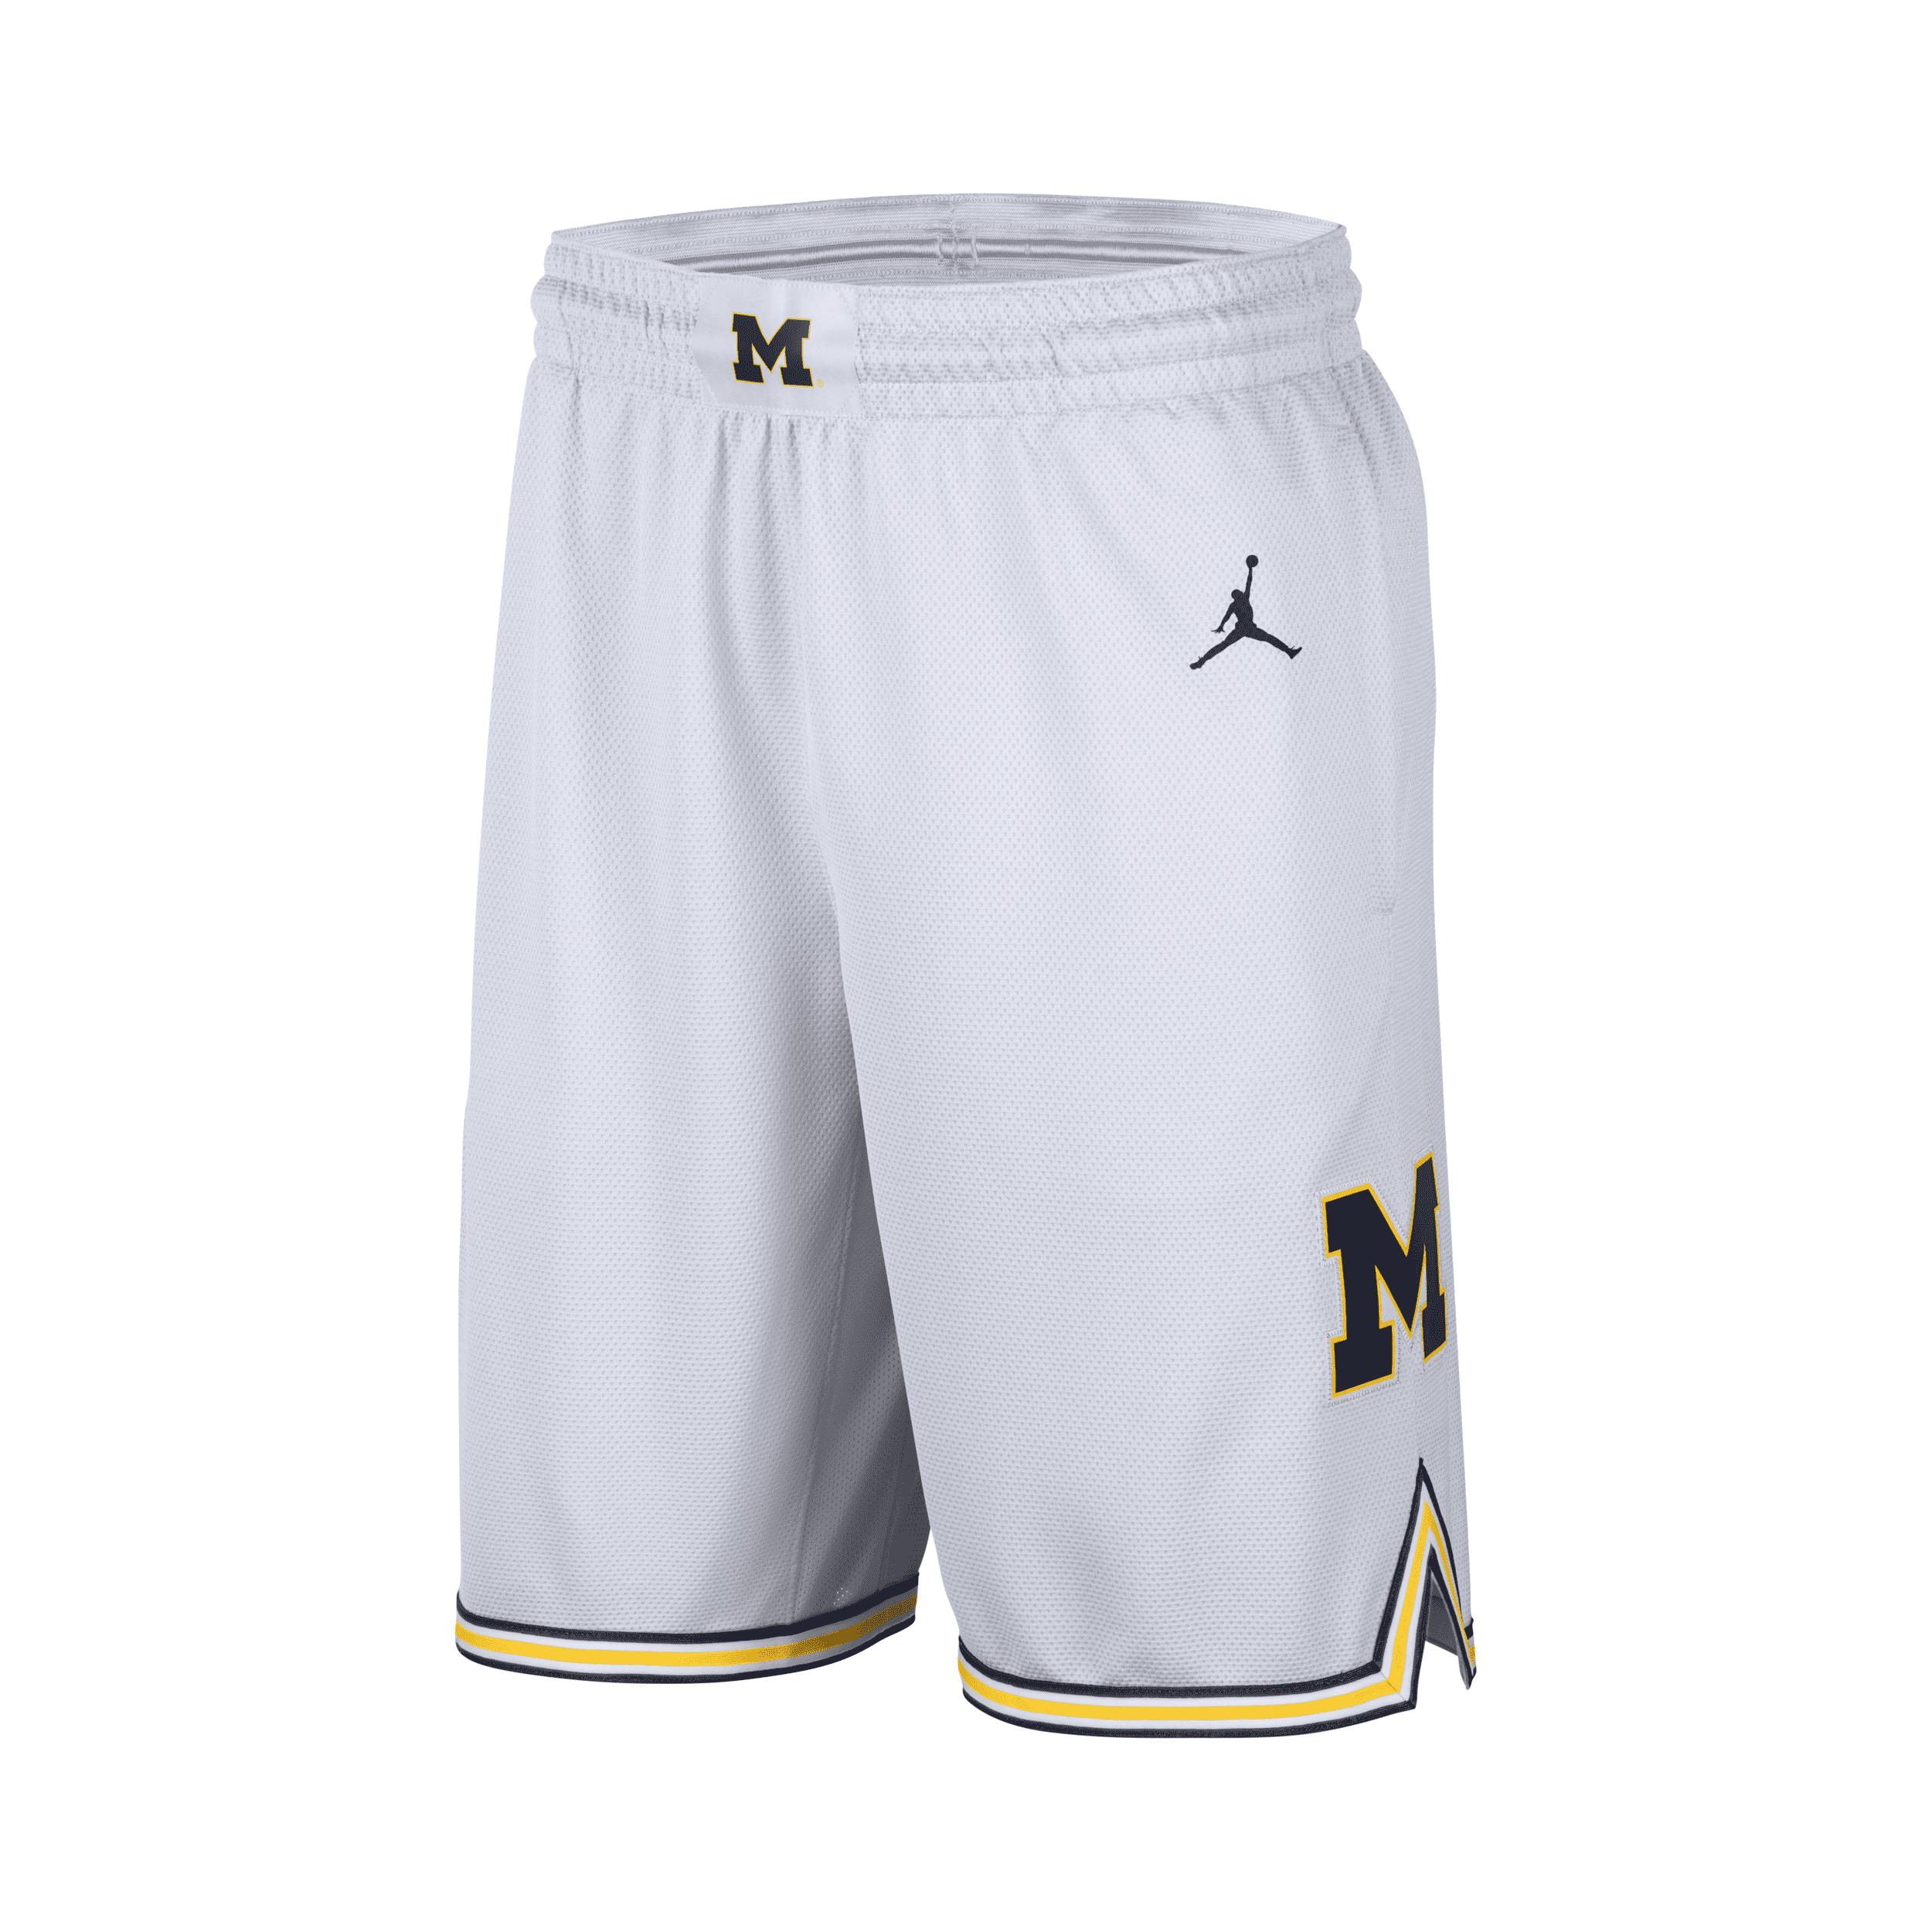 Nike Jordan College (michigan) Replica Basketball Shorts In White, in ...